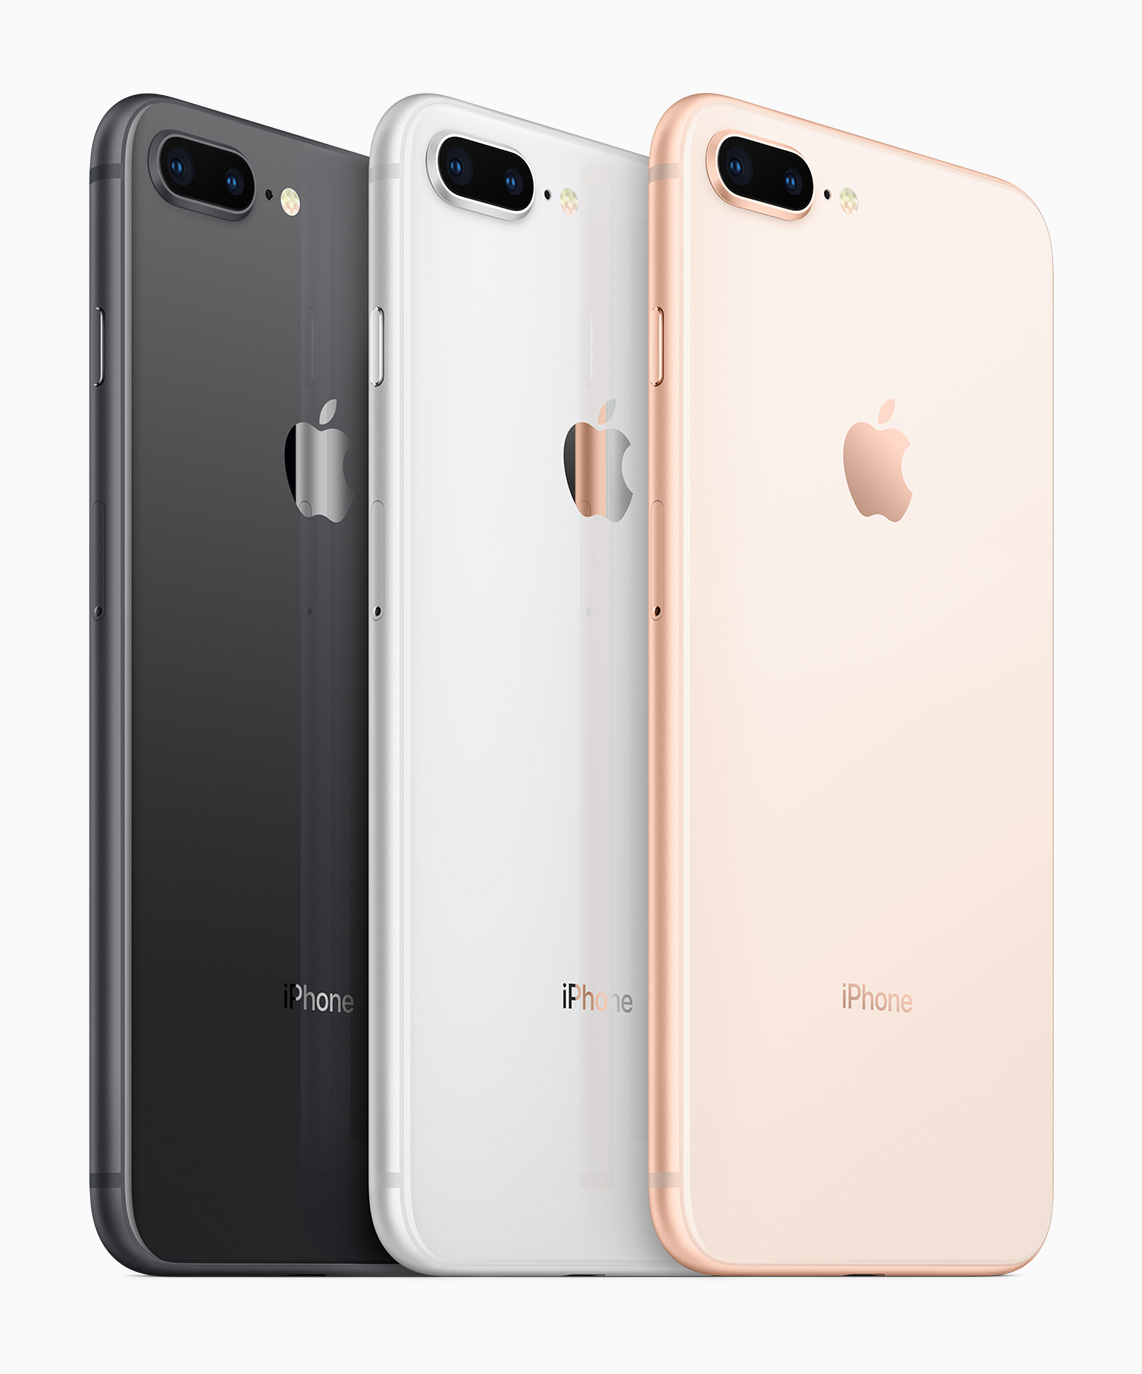 Apple umumkan tiga iPhone baru. iPhone 8, iPhone 8 Plus dan iPhone X.